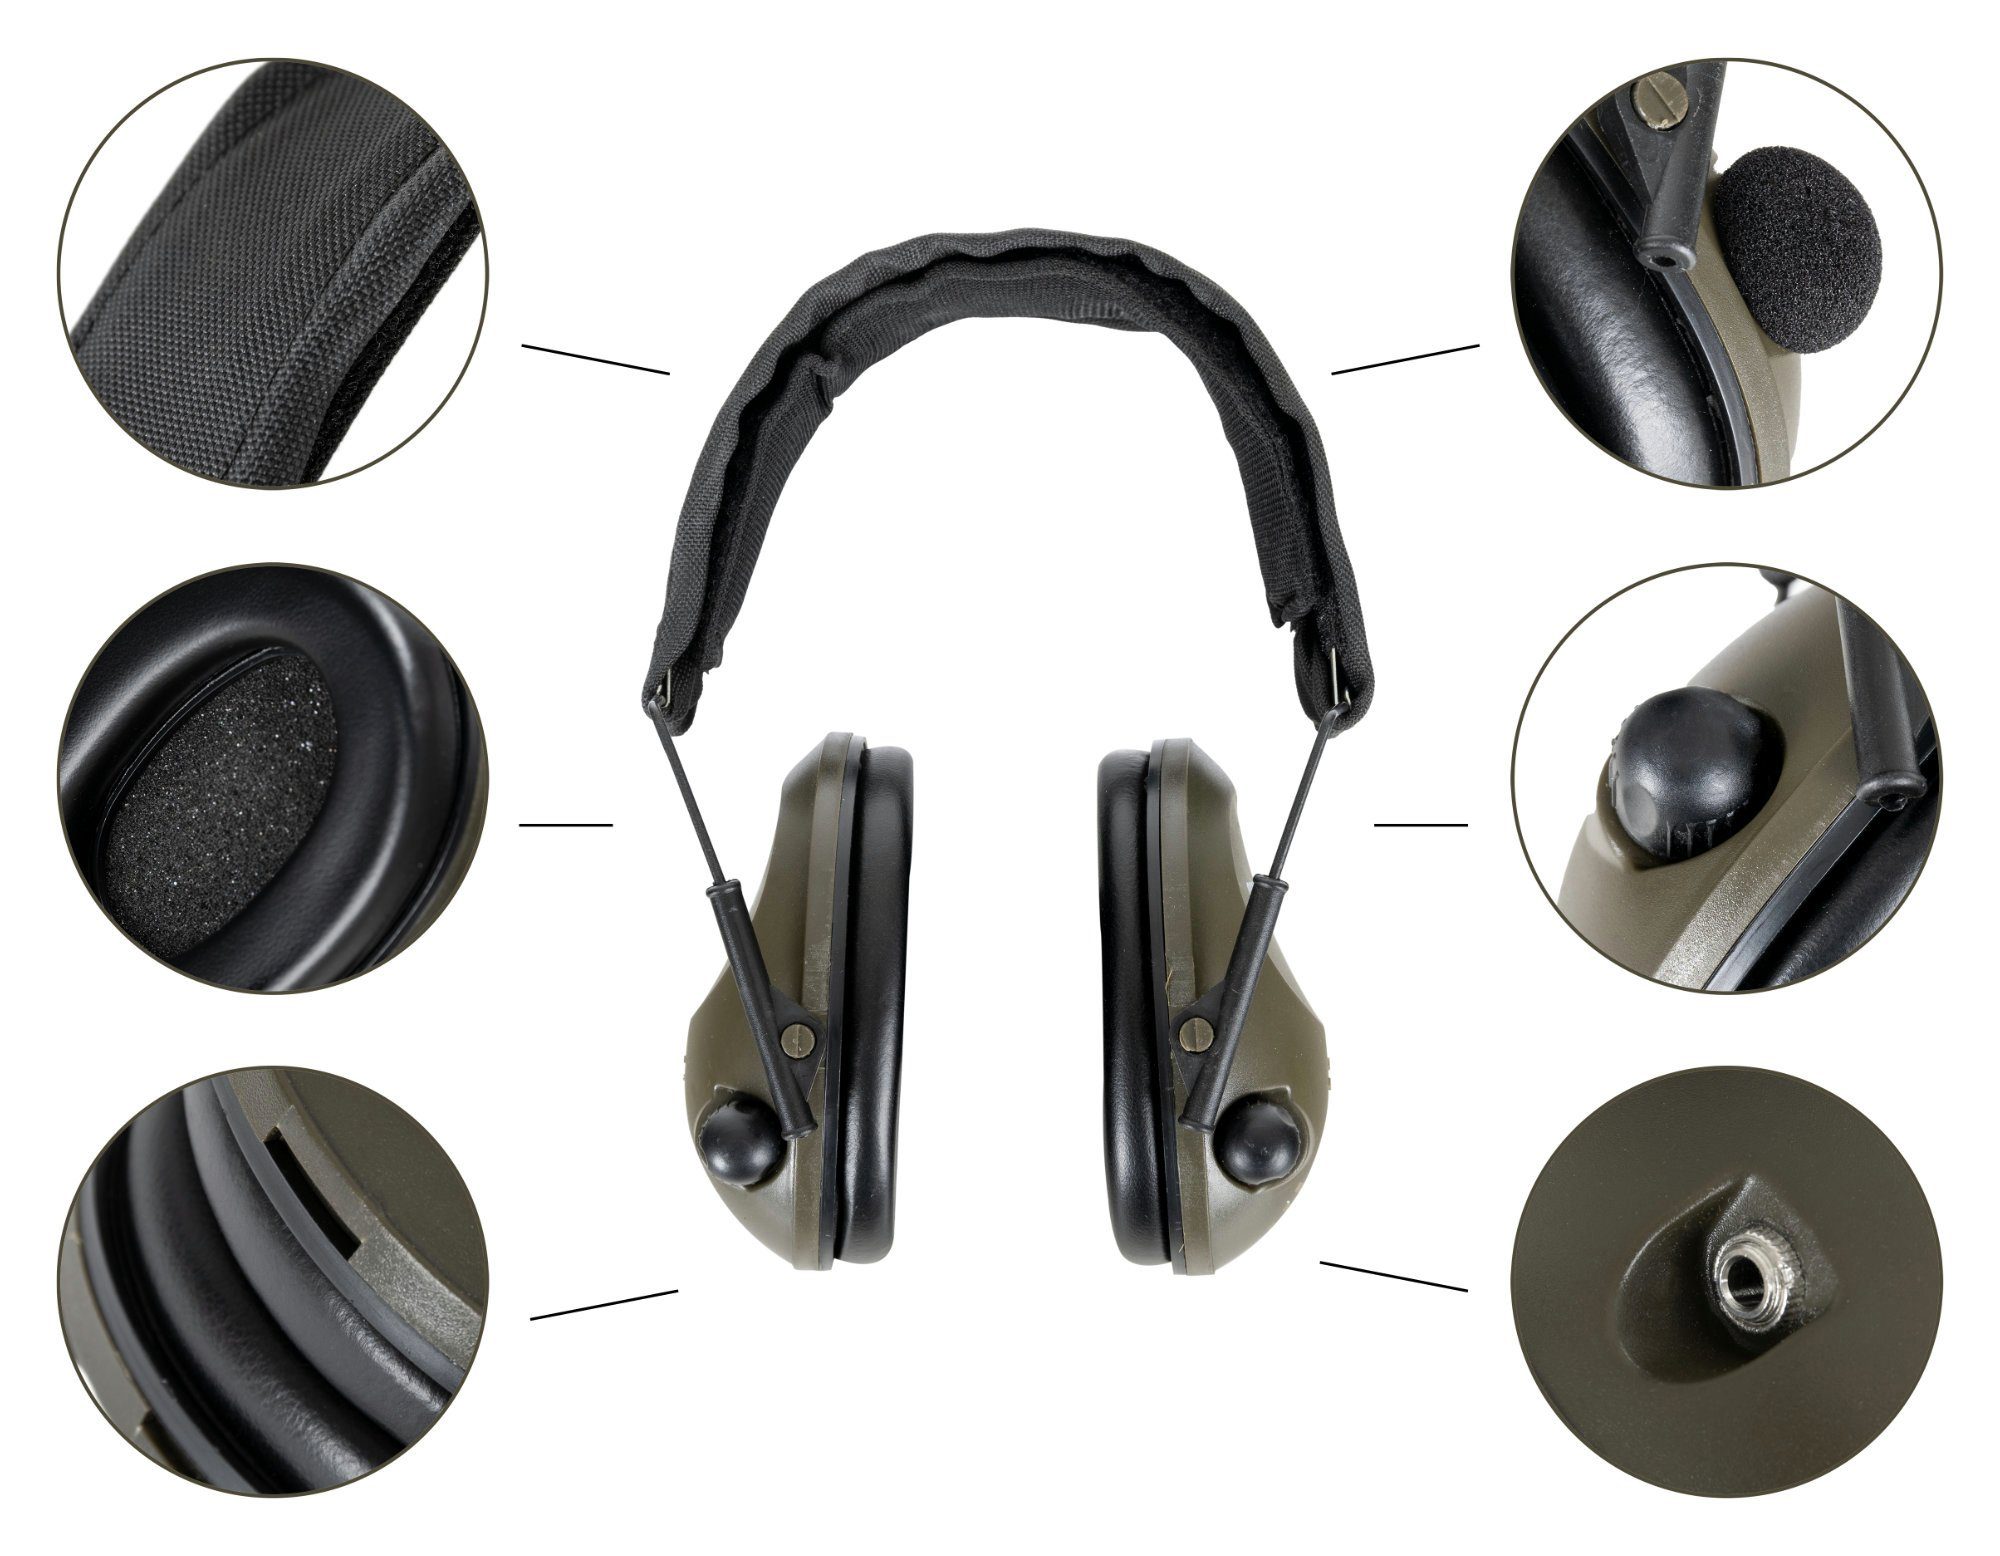 Stagecaptain Bügelgehörschutz ContraNoise Gehörschutz mit “Active-Volume-System”, Größenverstellbar Kopfhörer